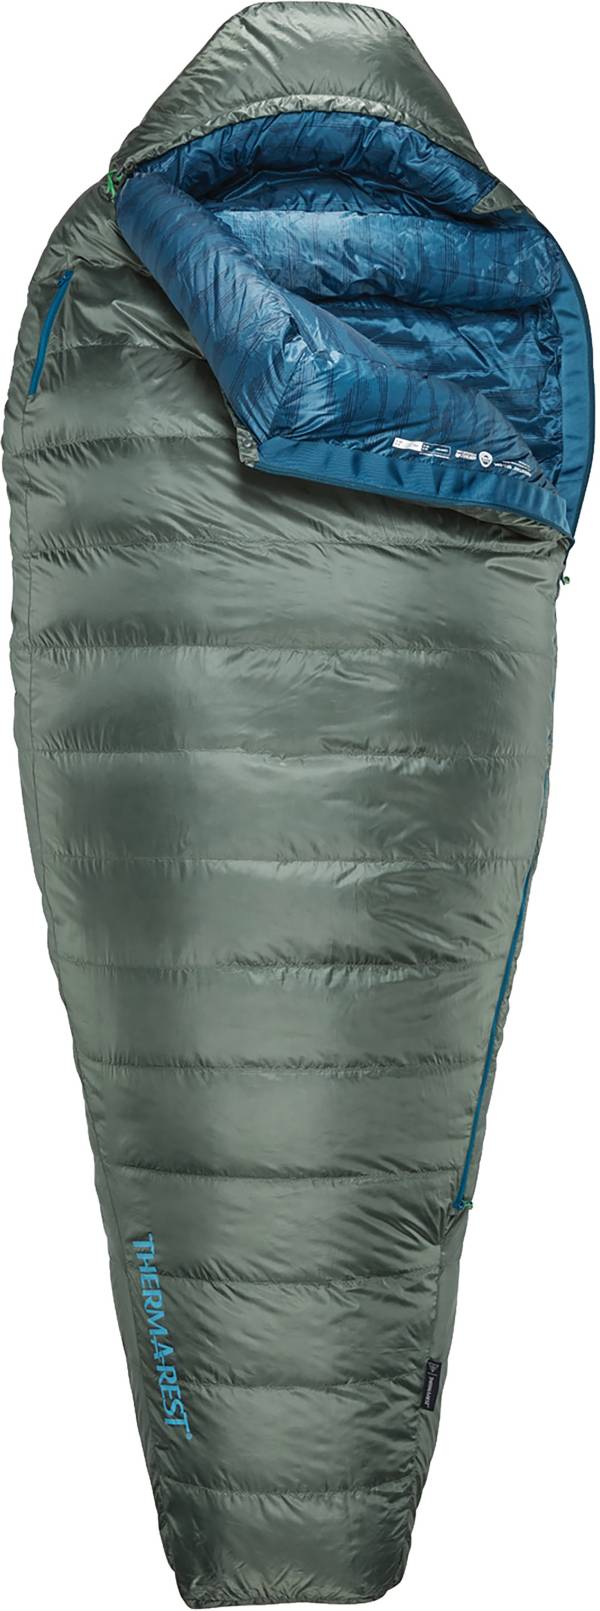 Questar 0F/-18C Sleeping Bag product image